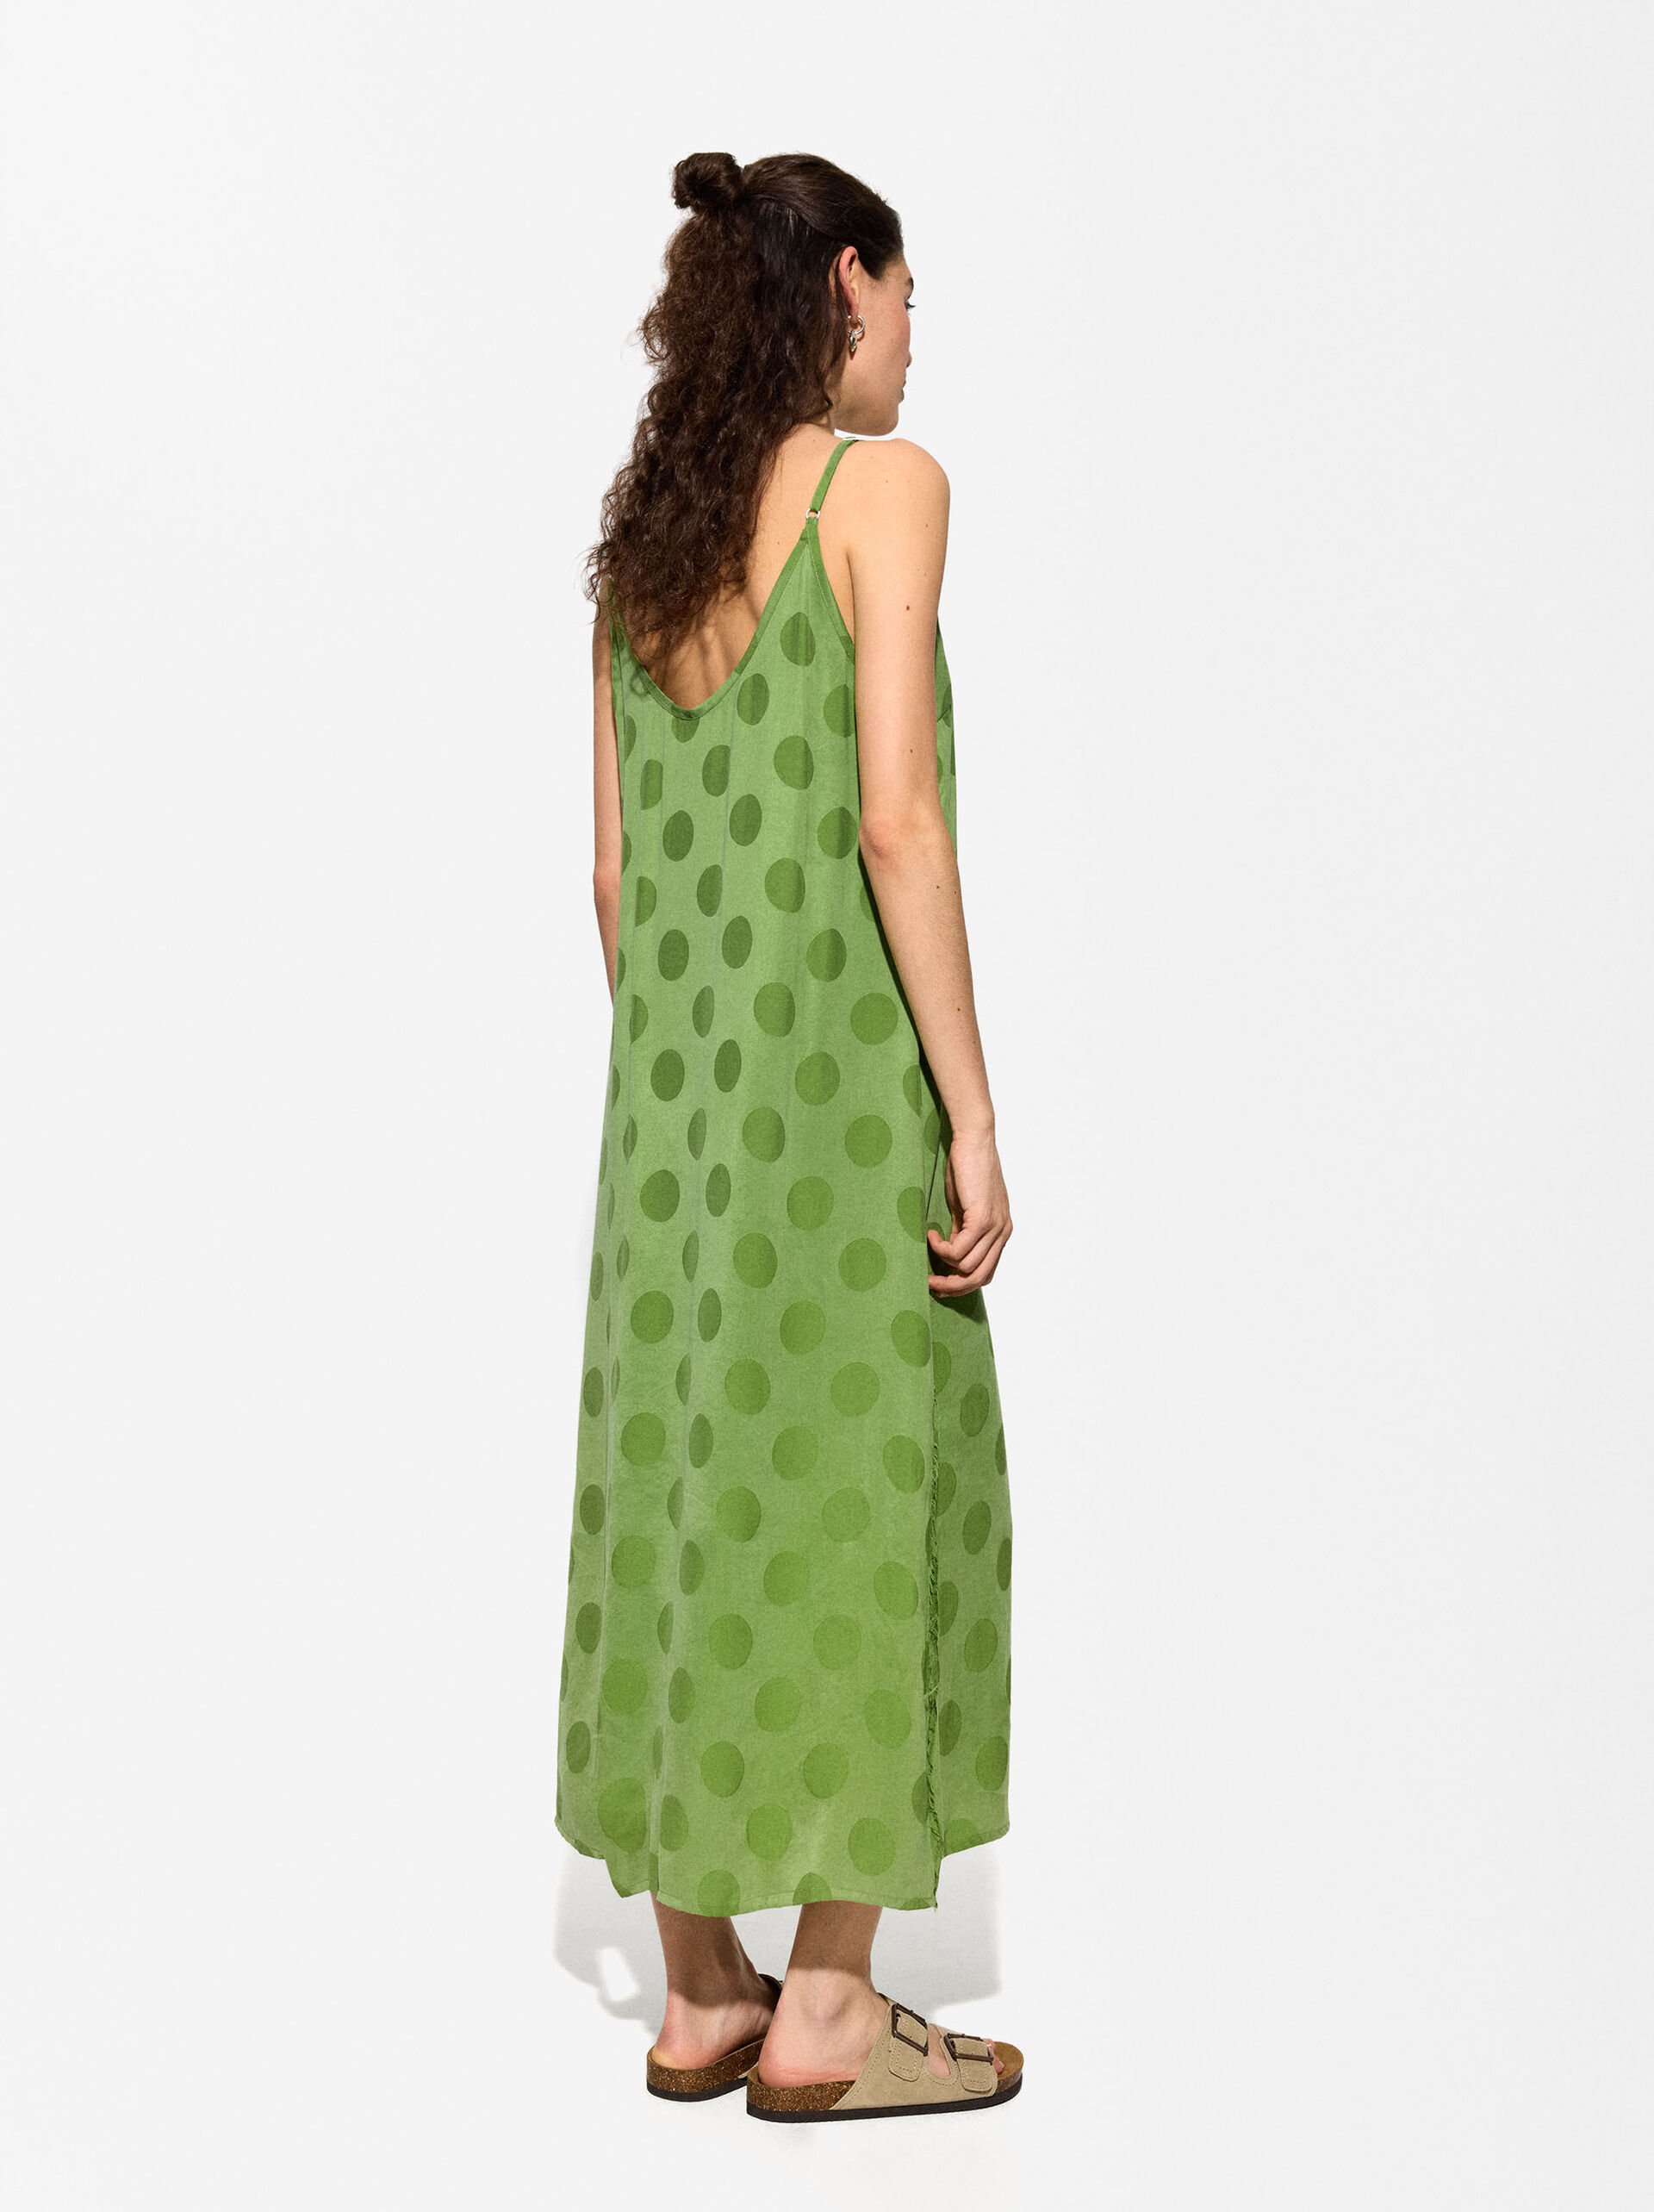 Polka Dot Strappy Dress image number 4.0